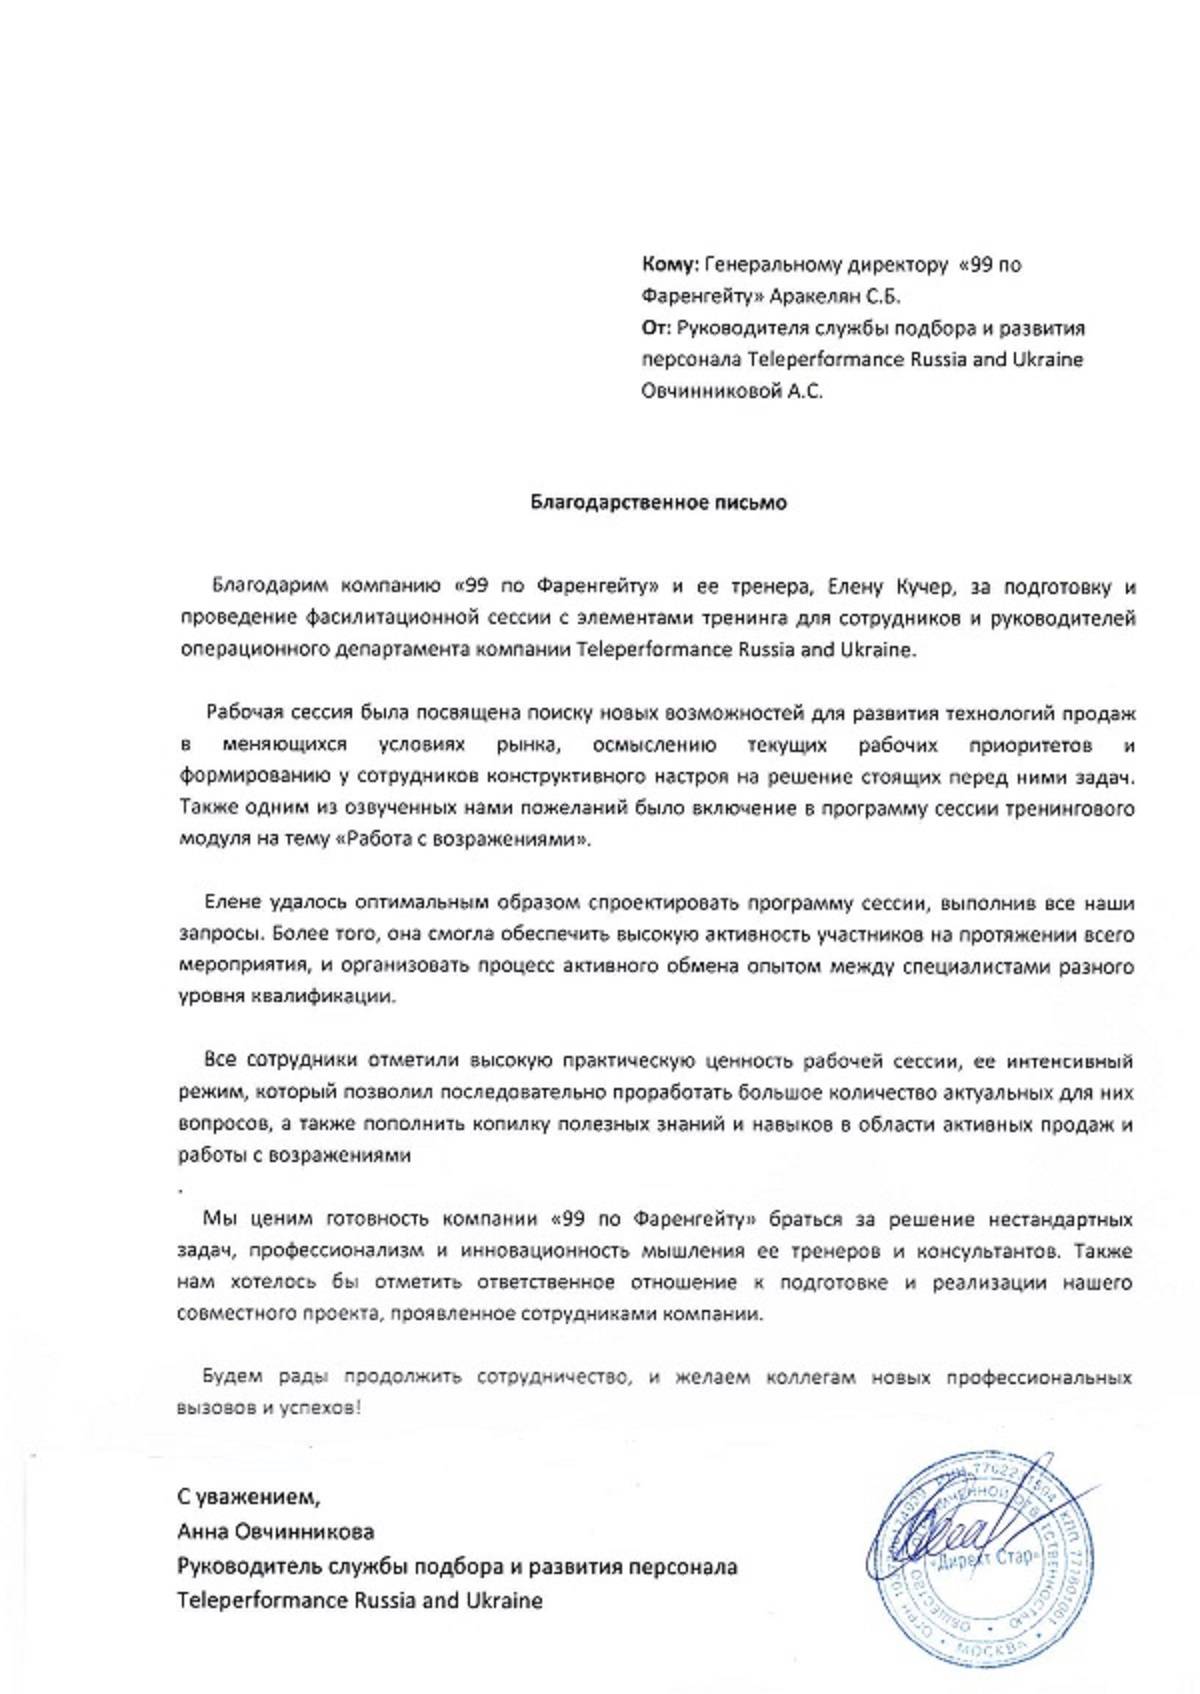 Teleperformans Russia and Ukraine